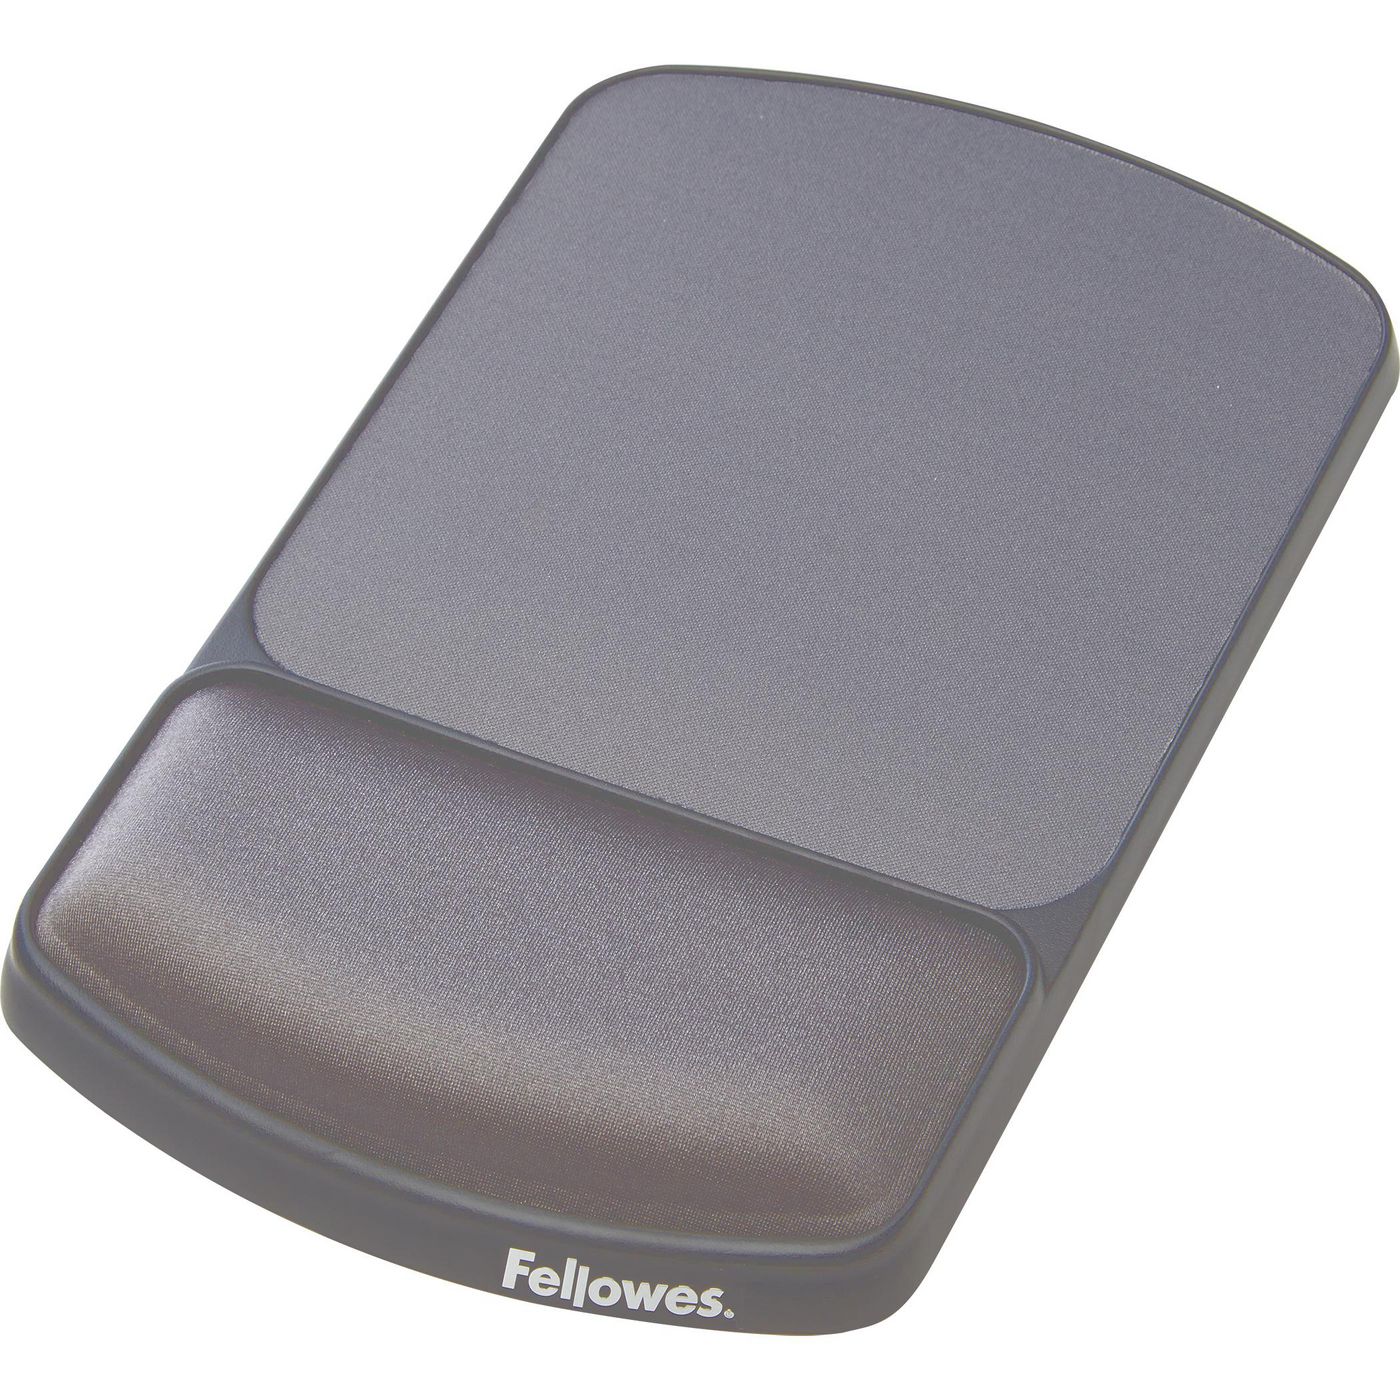 Fellowes 9374001 W128253795 Angle Adjustable Mouse Pad 